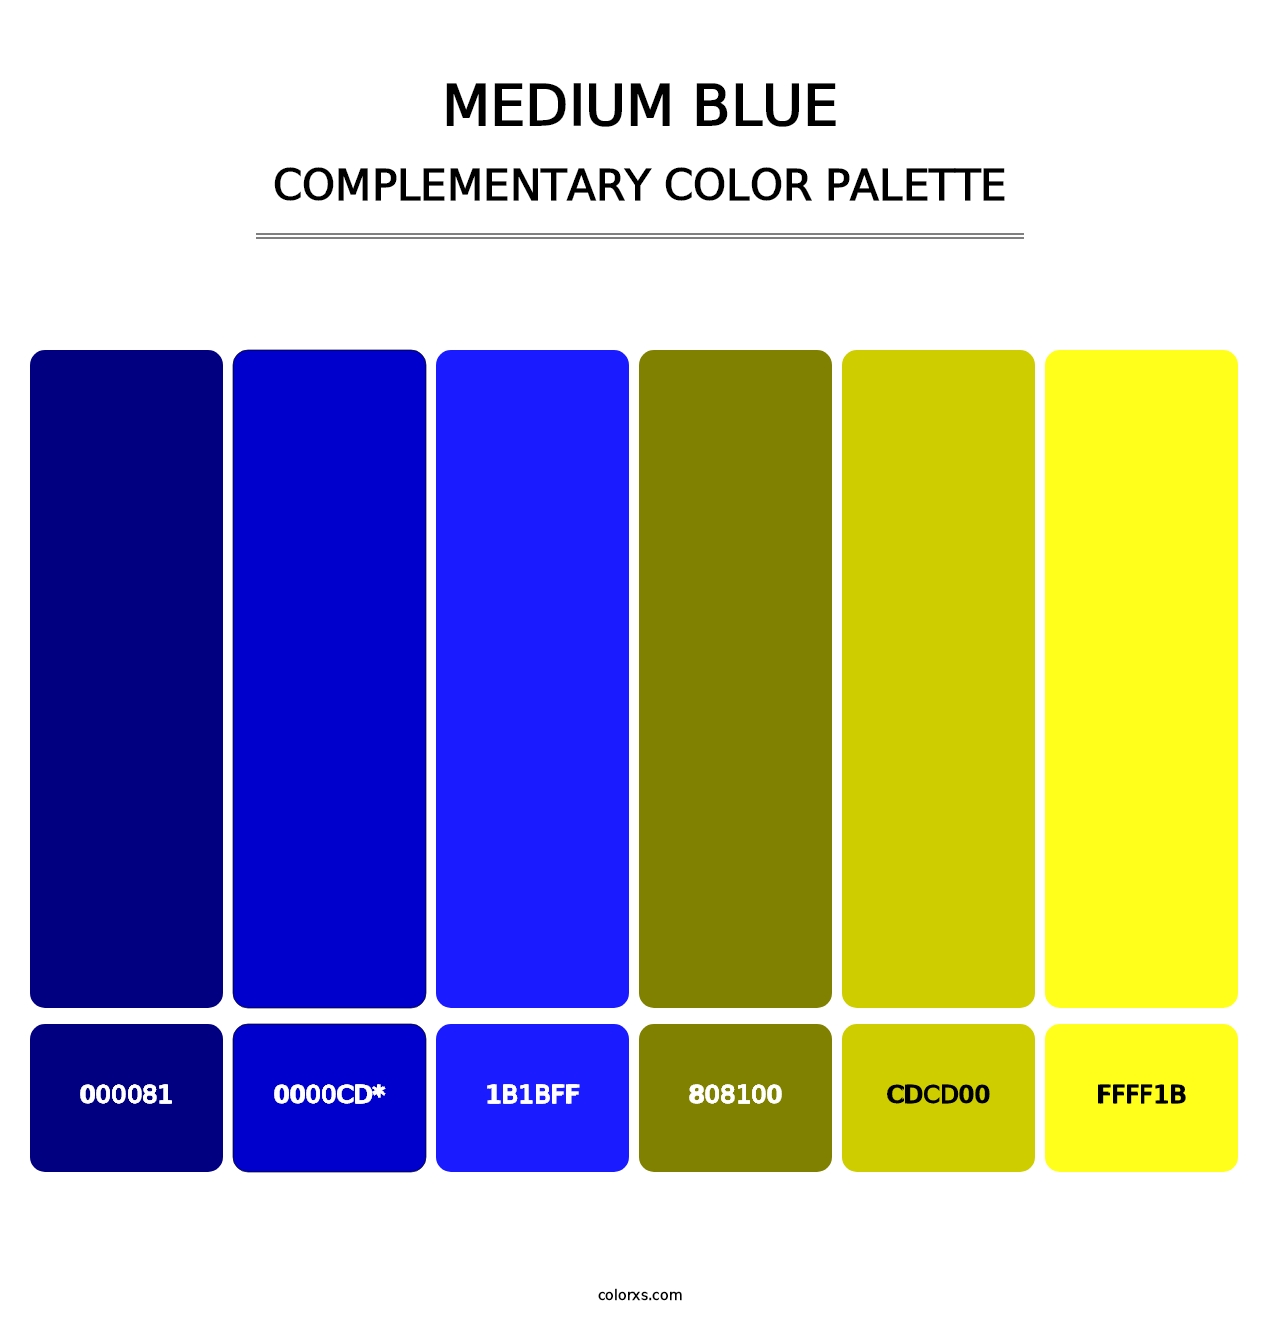 Medium Blue - Complementary Color Palette